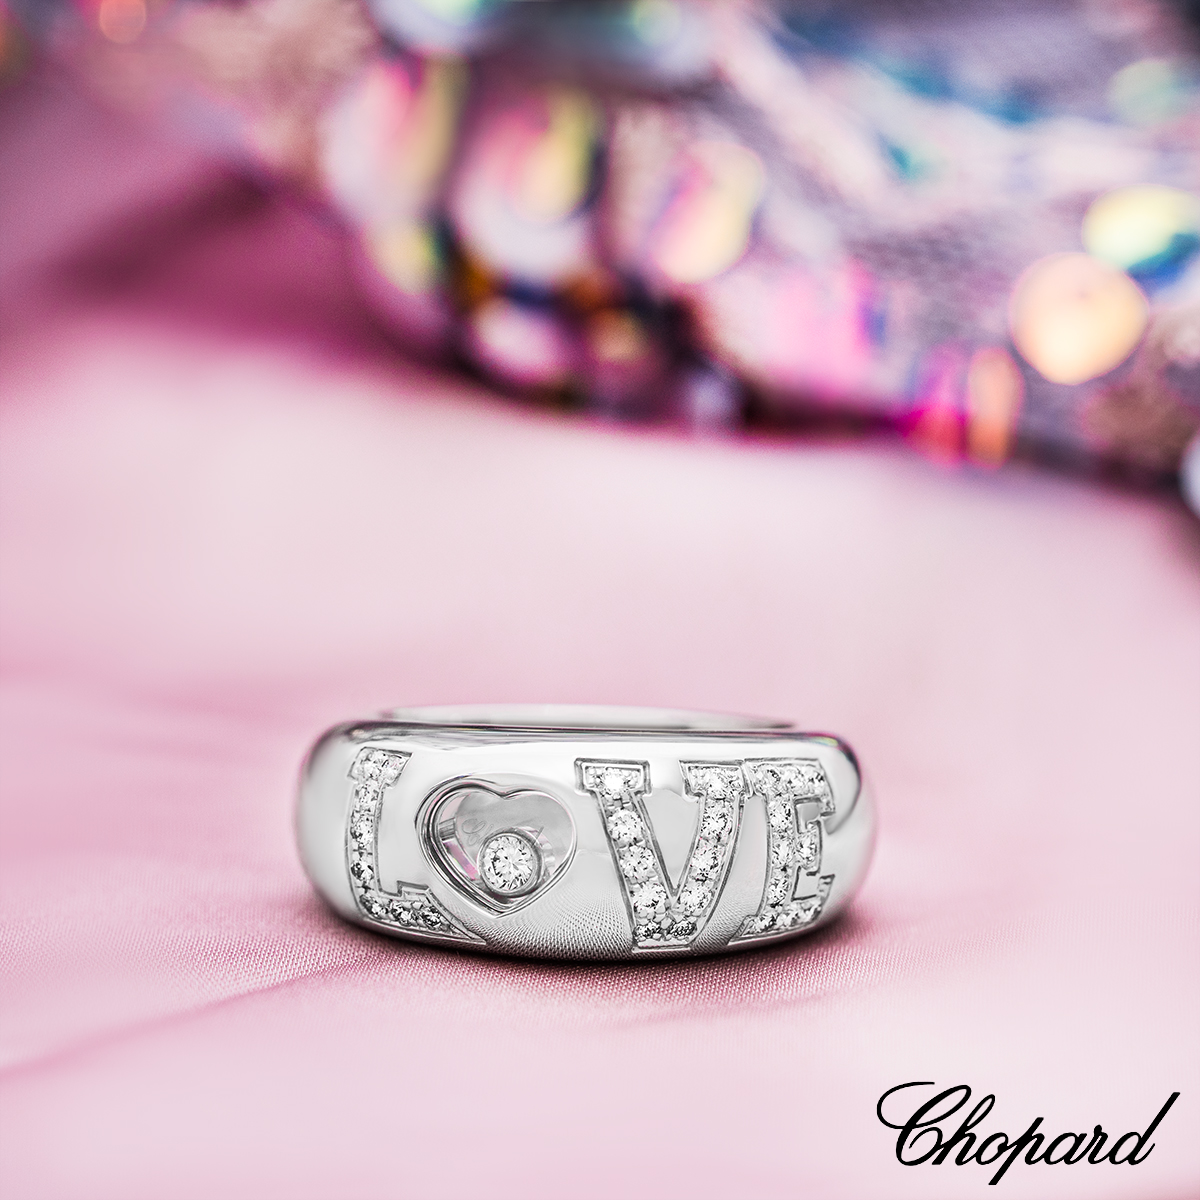 Chopard White Gold Happy Diamonds Love Ring 82/2899-20